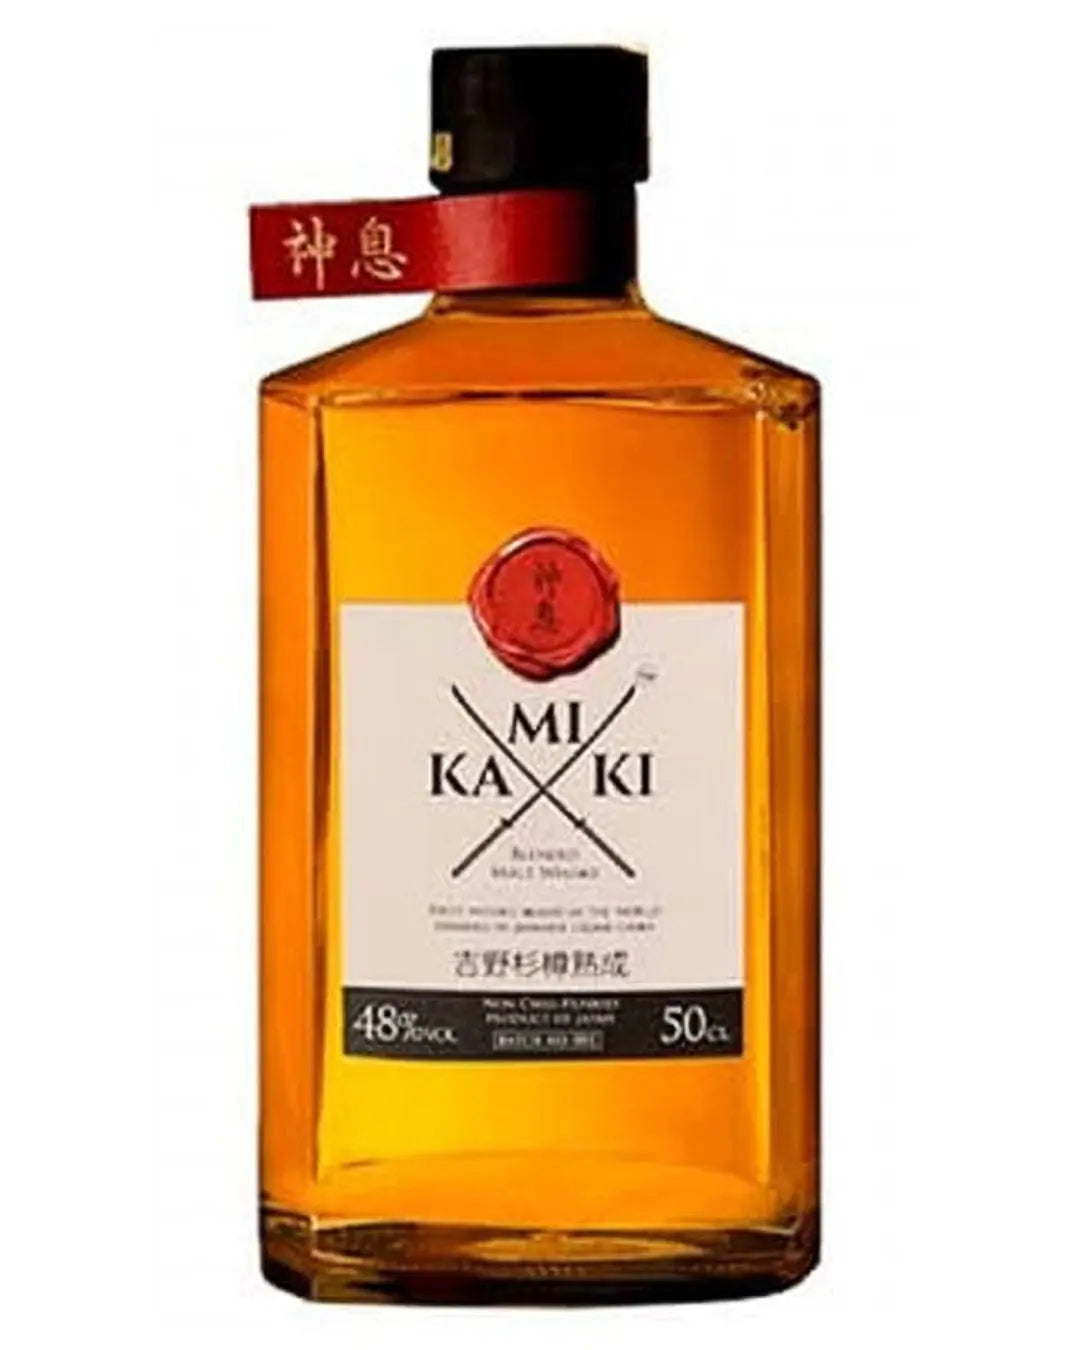 Kamiki Japanese Whisky, 50 cl Whisky